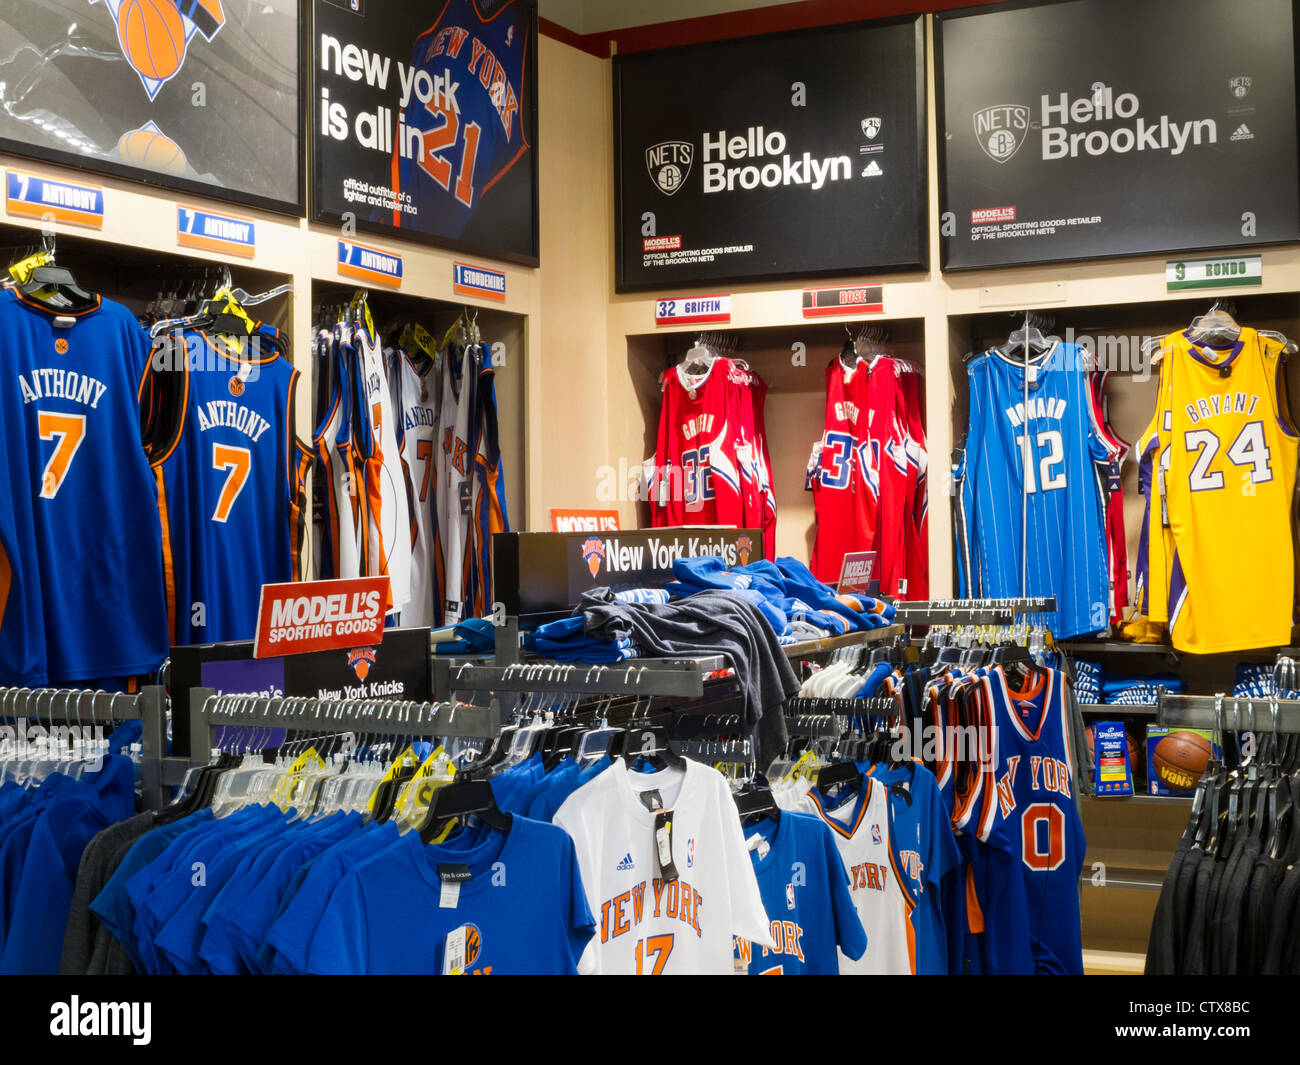 NBA Jerseys, Modell's Sporting Goods Store Interior, NYC Stock Photo